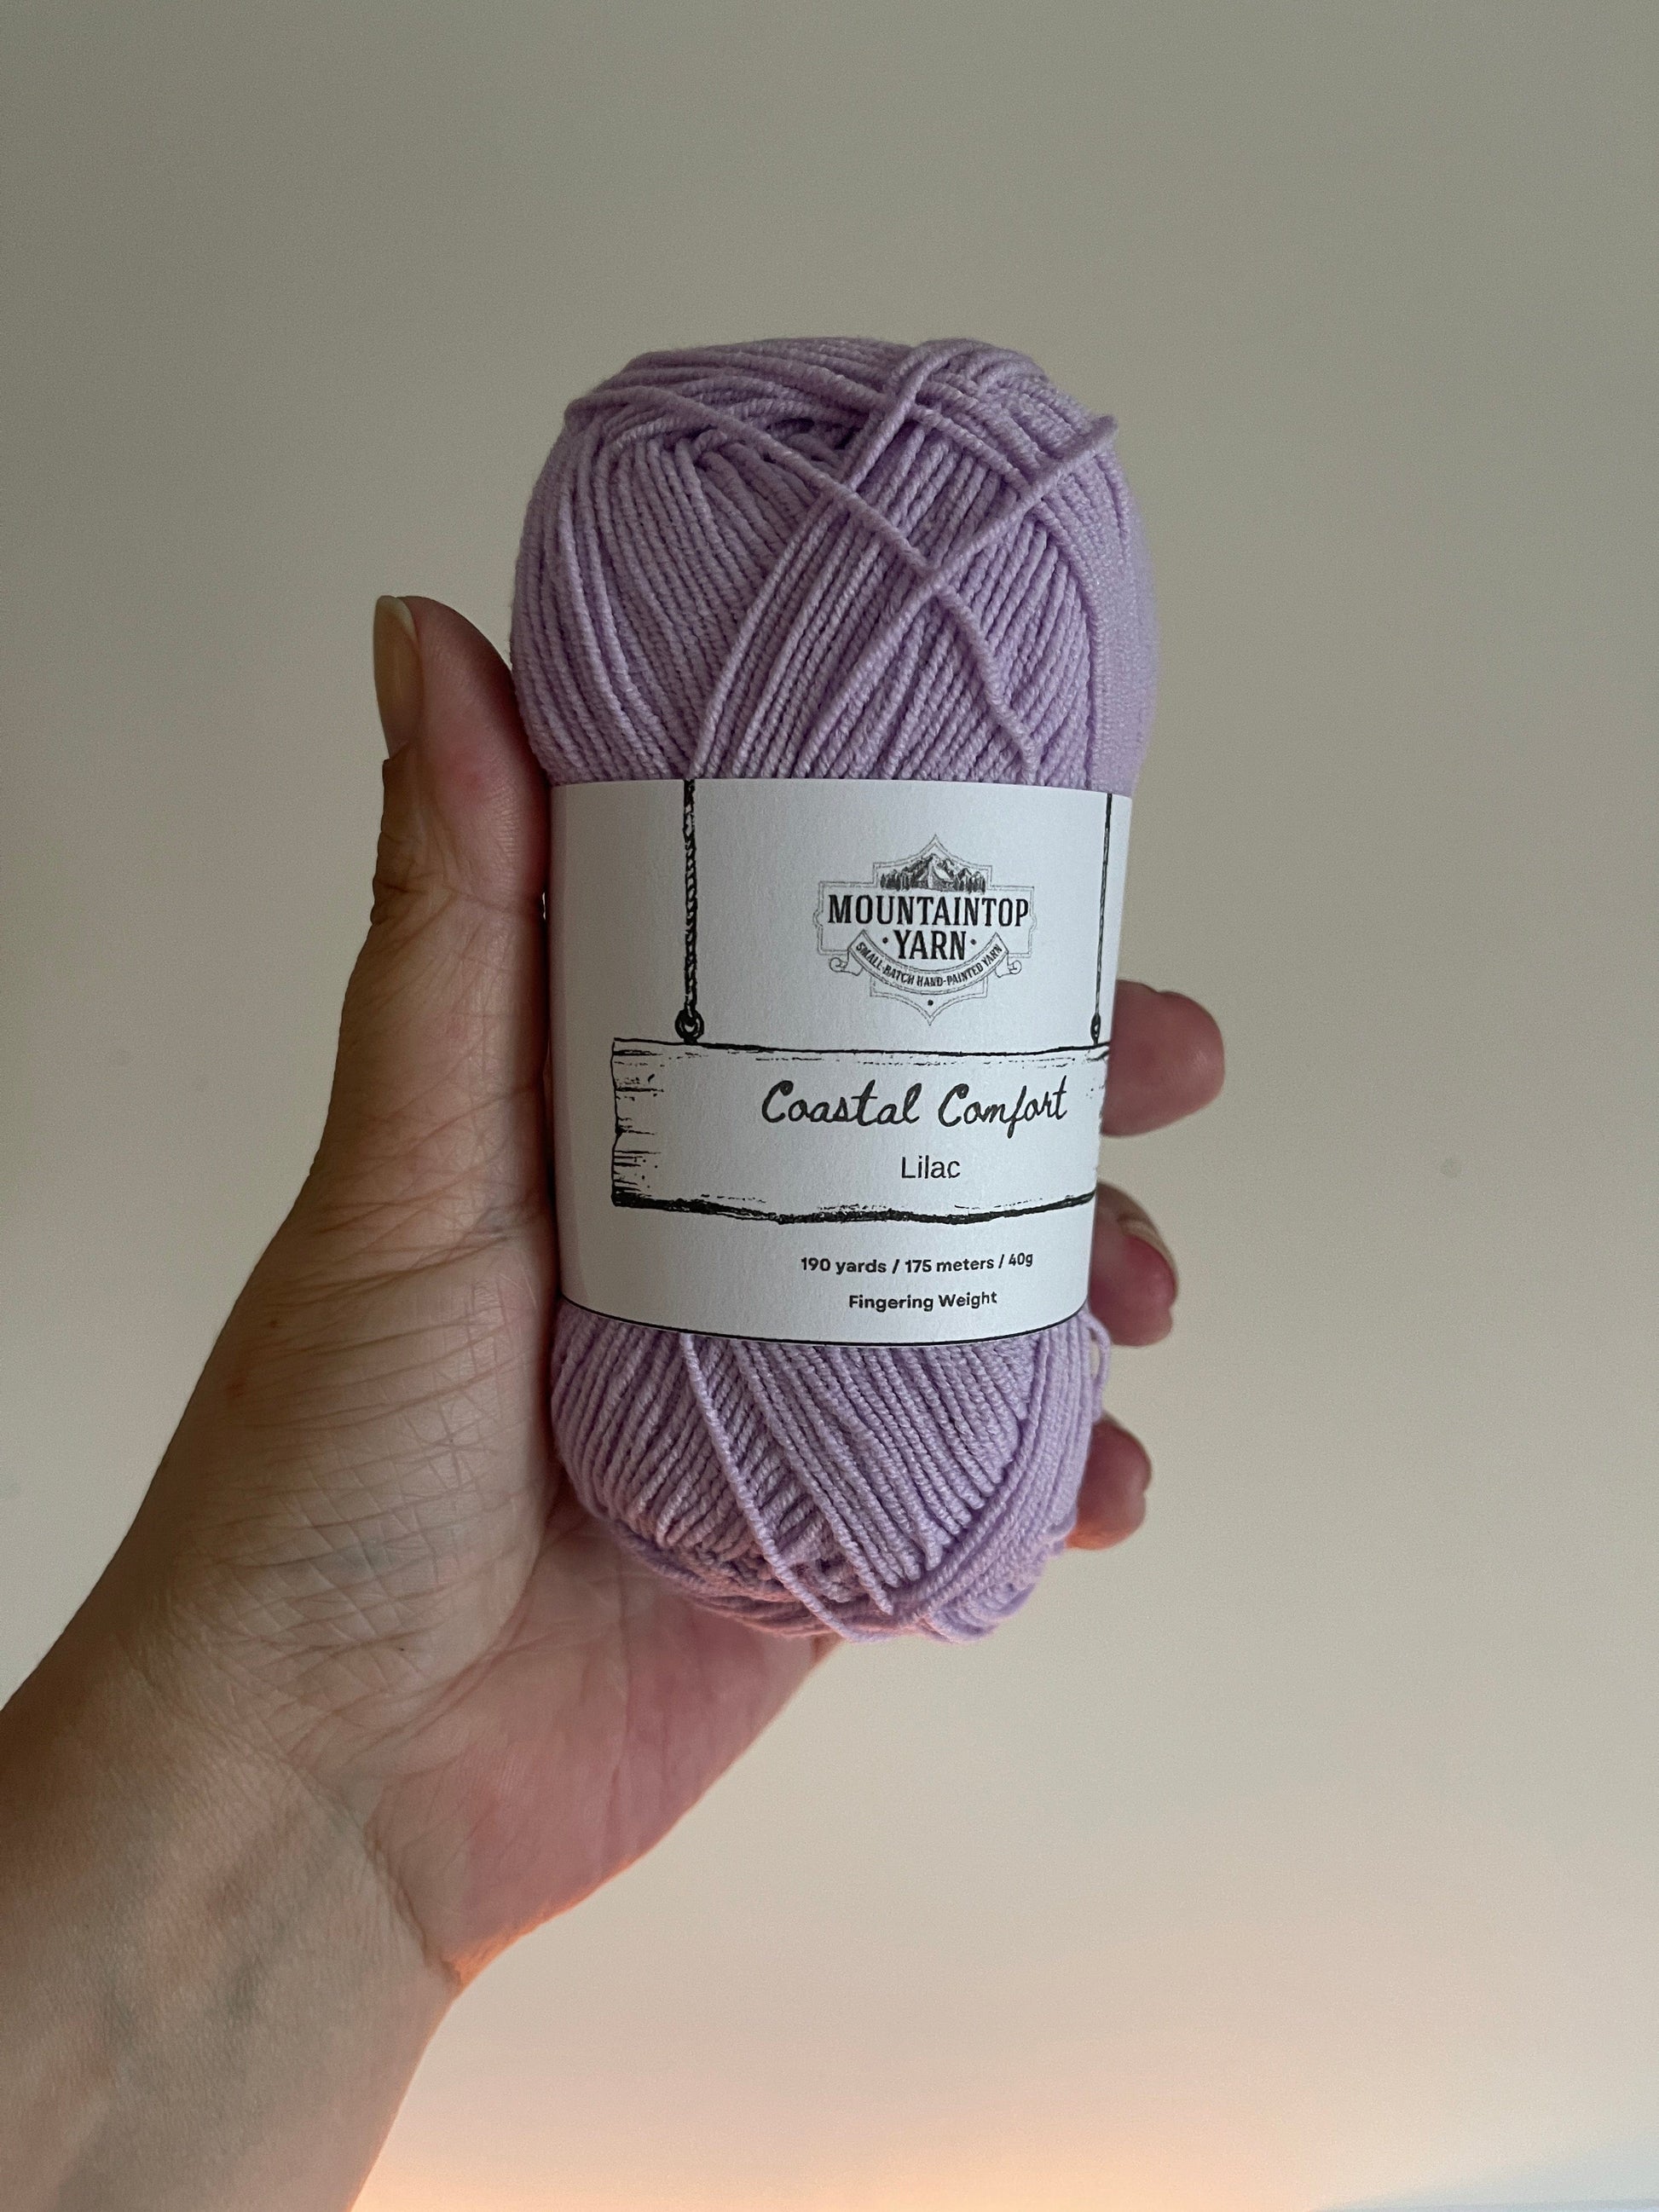 Mountaintop Yarn Lilac Coastal Comfort - Cotton and Acrylic Blend Yarn Yarn